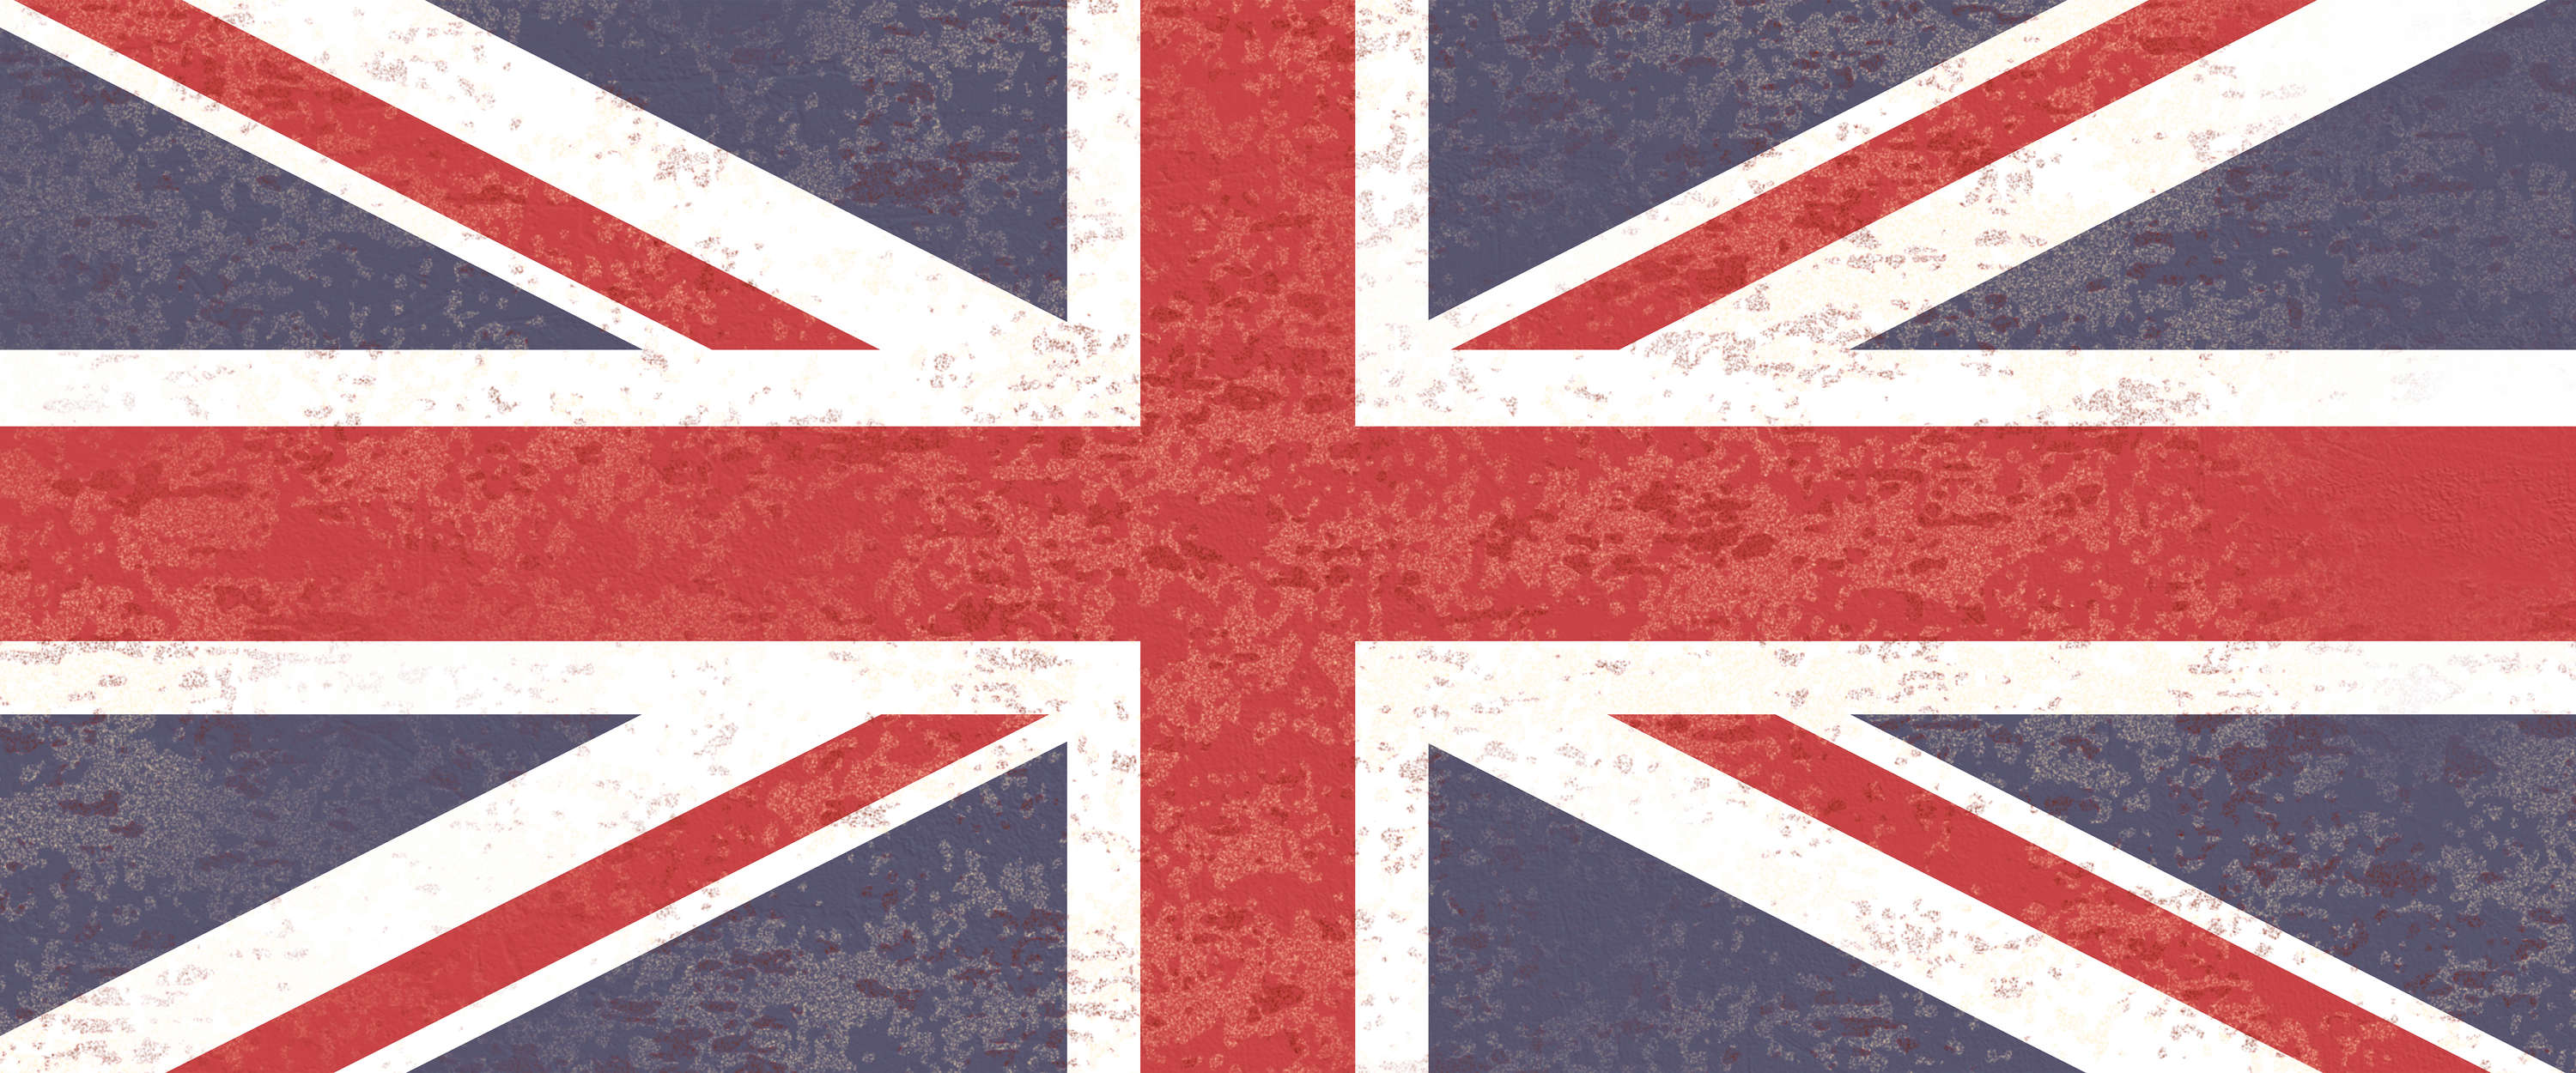             Muurschildering Union Jack - Vlag van Groot-Brittannië
        